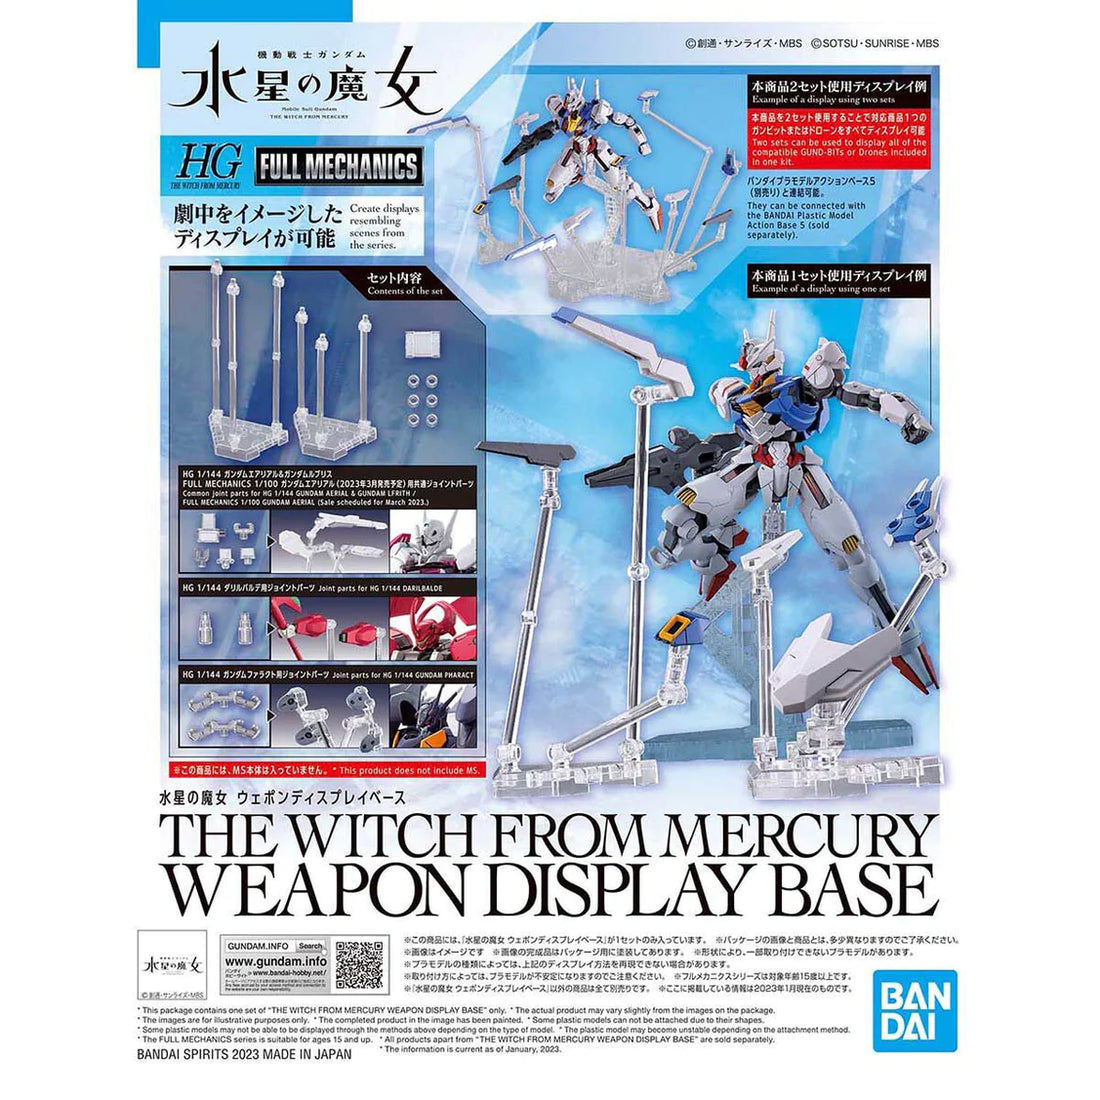 HGTWFM THE WITCH FROM MERCURY Weapon display base - Gundam Extra-Your BEST Gunpla Supplier